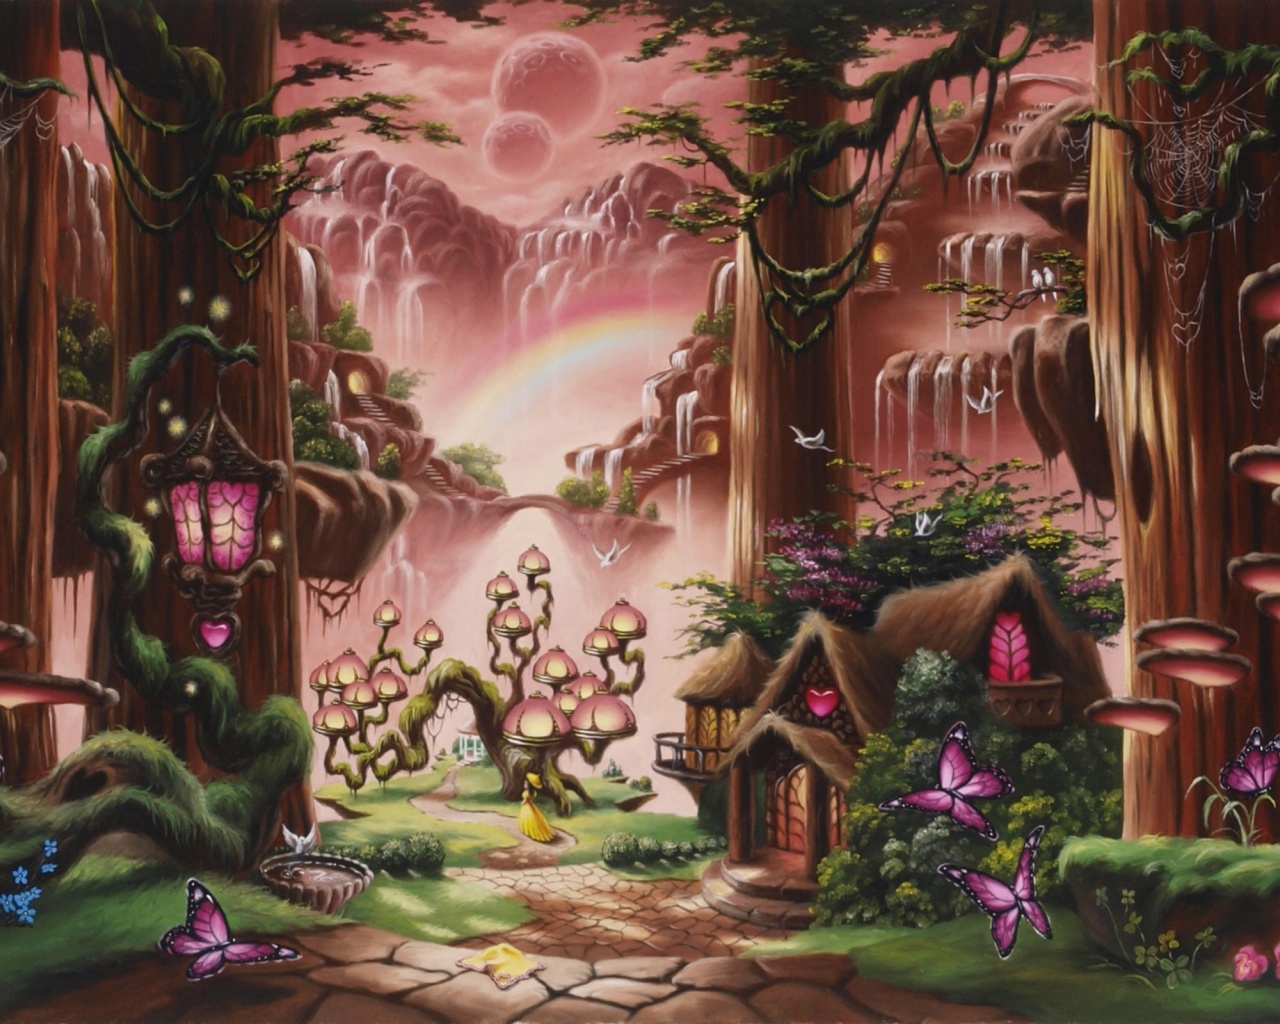 Fairytale Land